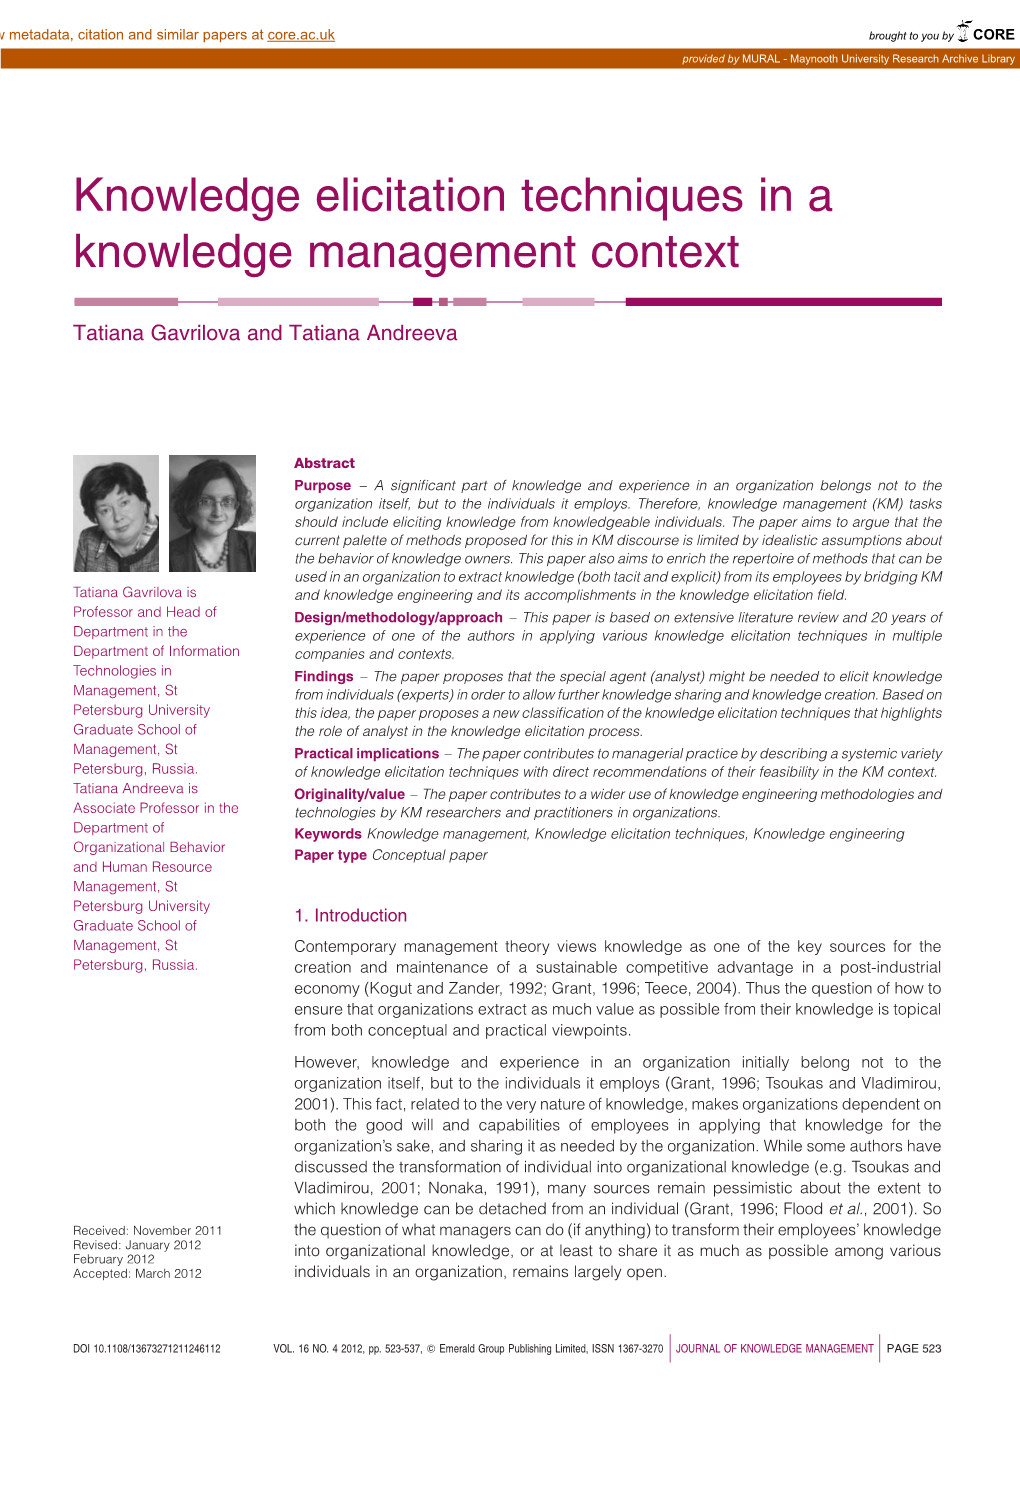 Knowledge Elicitation Techniques in a Knowledge Management Context